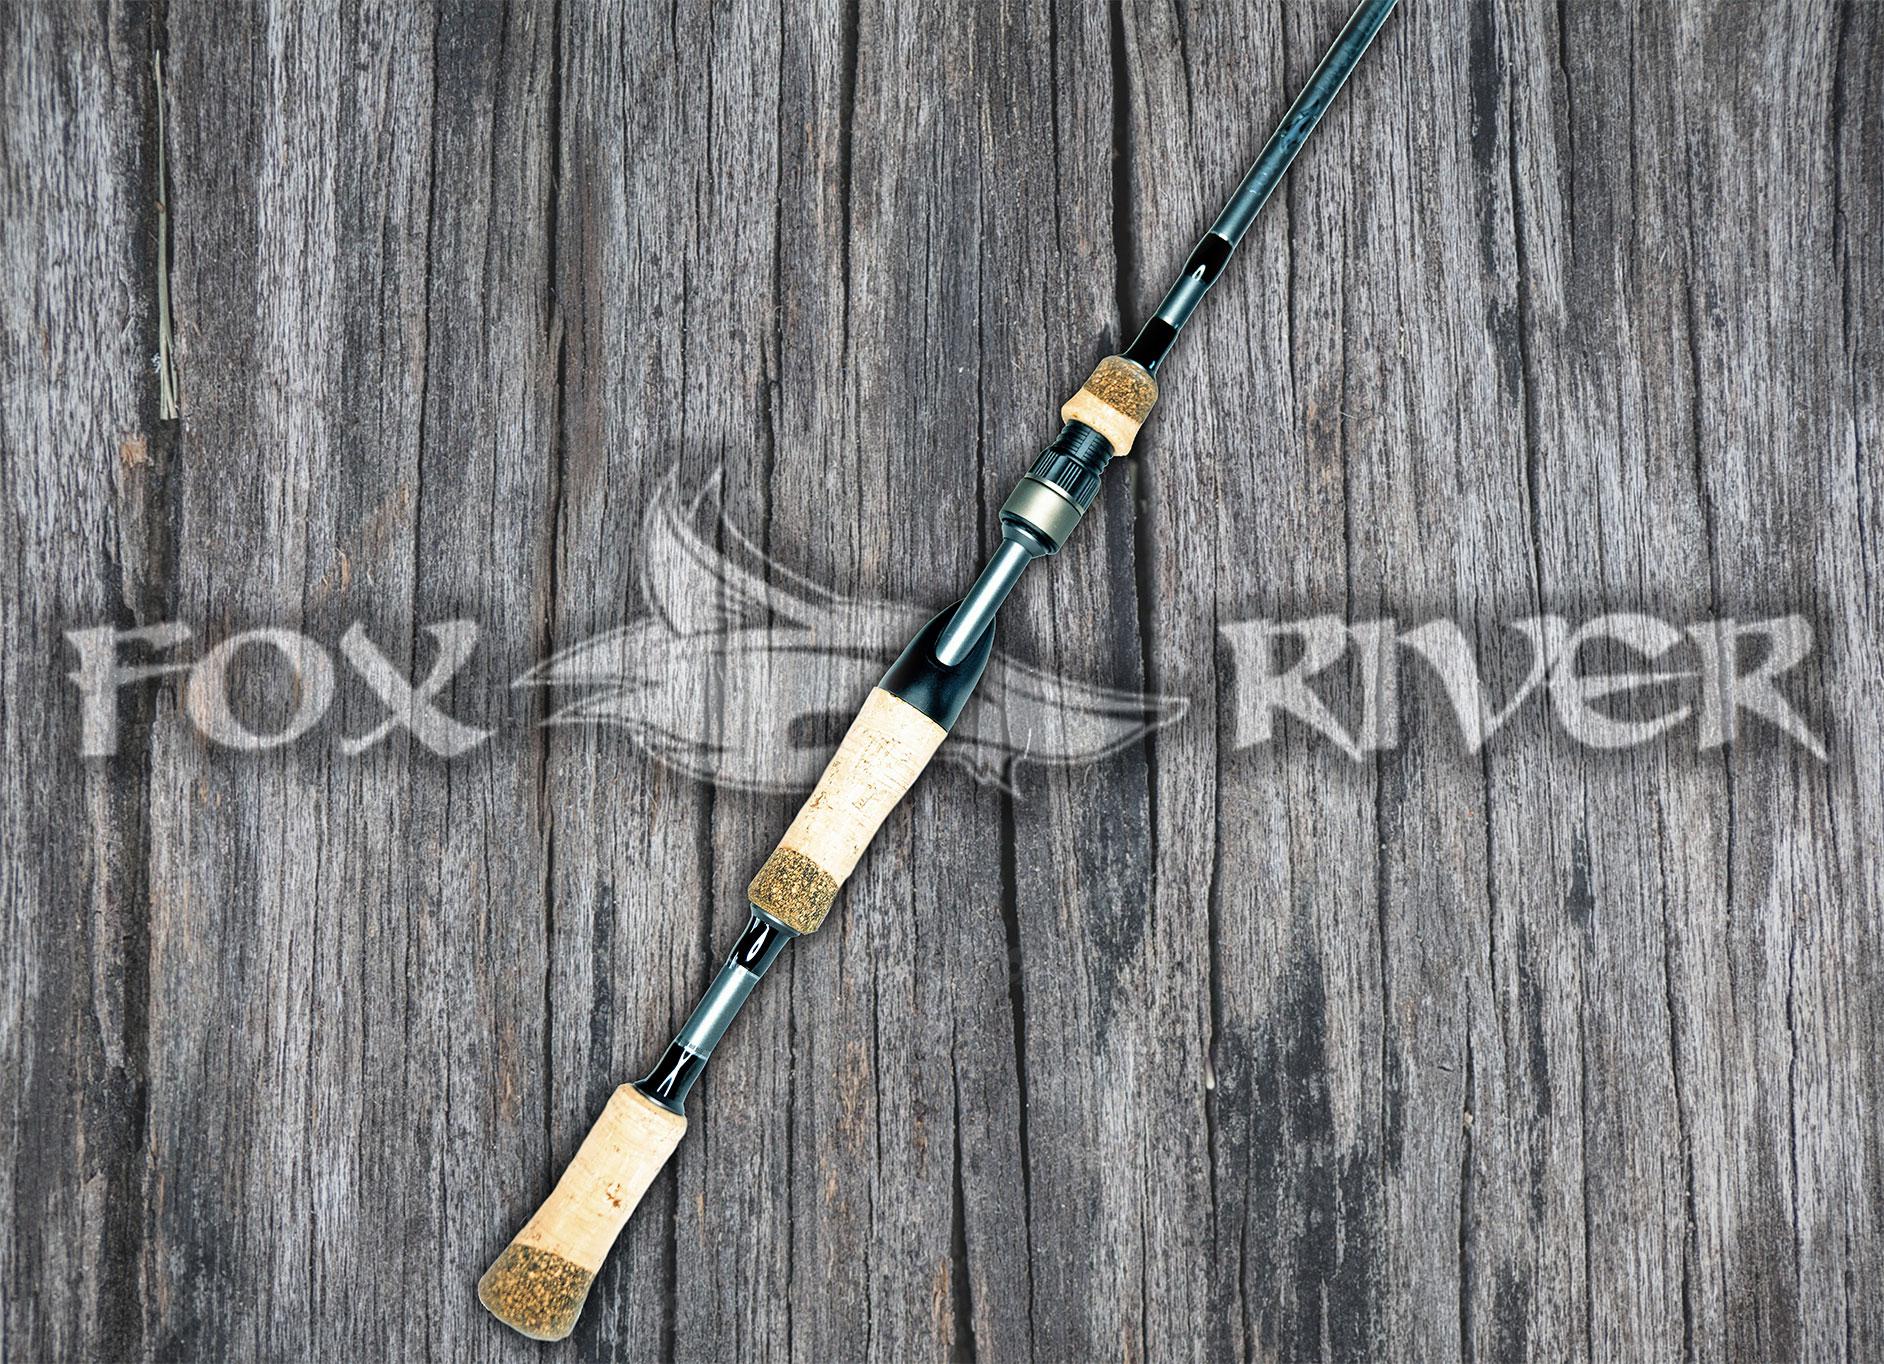 Fox River Lures and Rods - 6' 6 Medium Split-Grip Spinning Rod